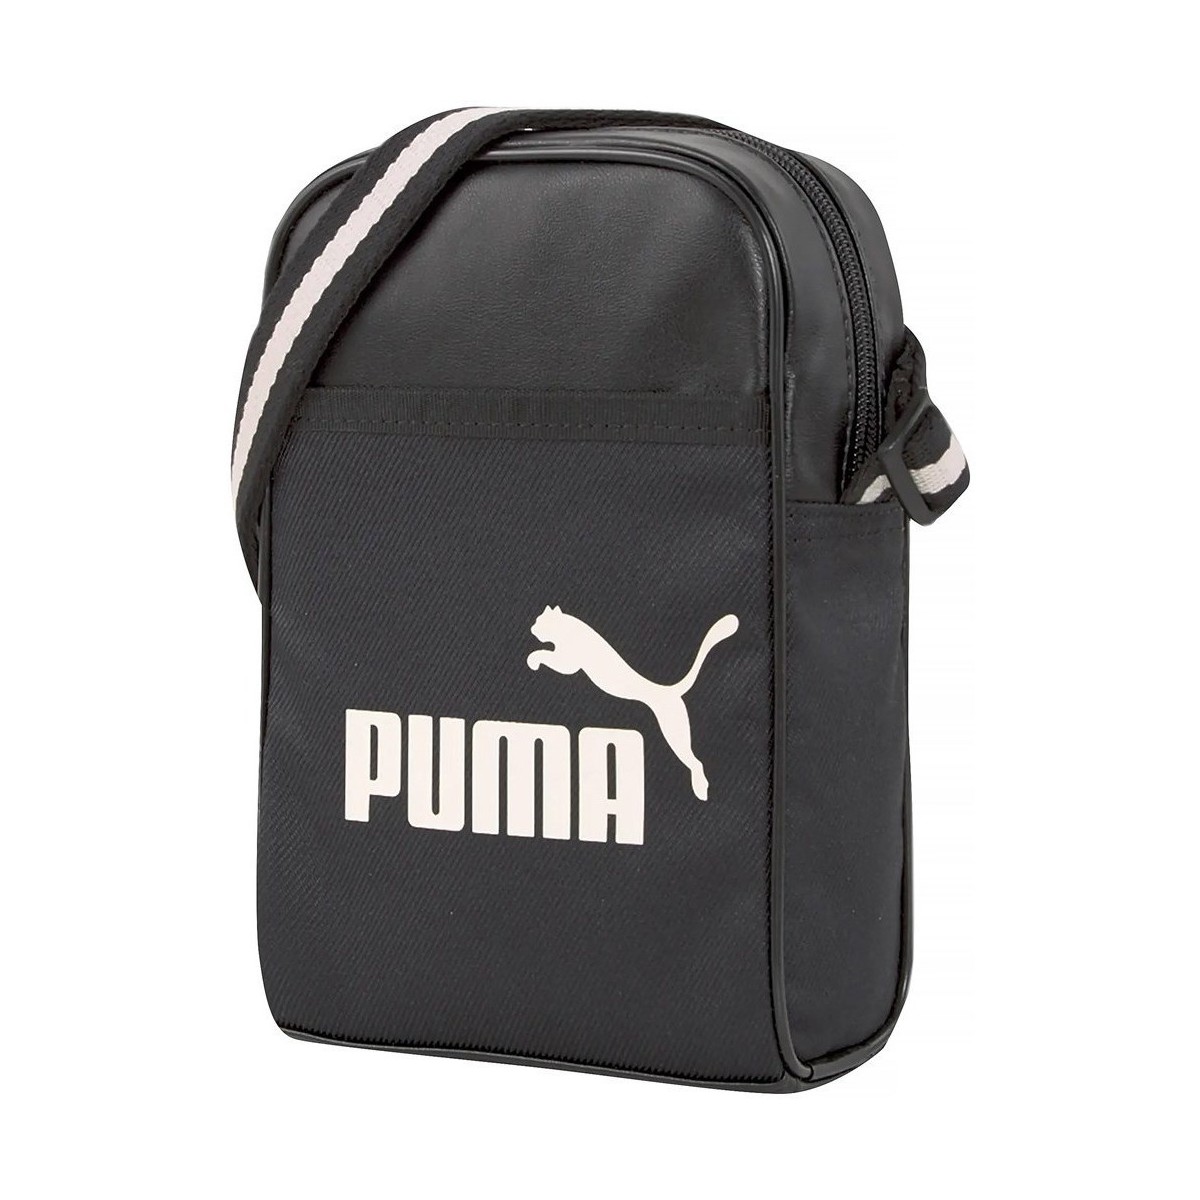 Sacs Sacs porté main Puma Campus Compact Portable Noir